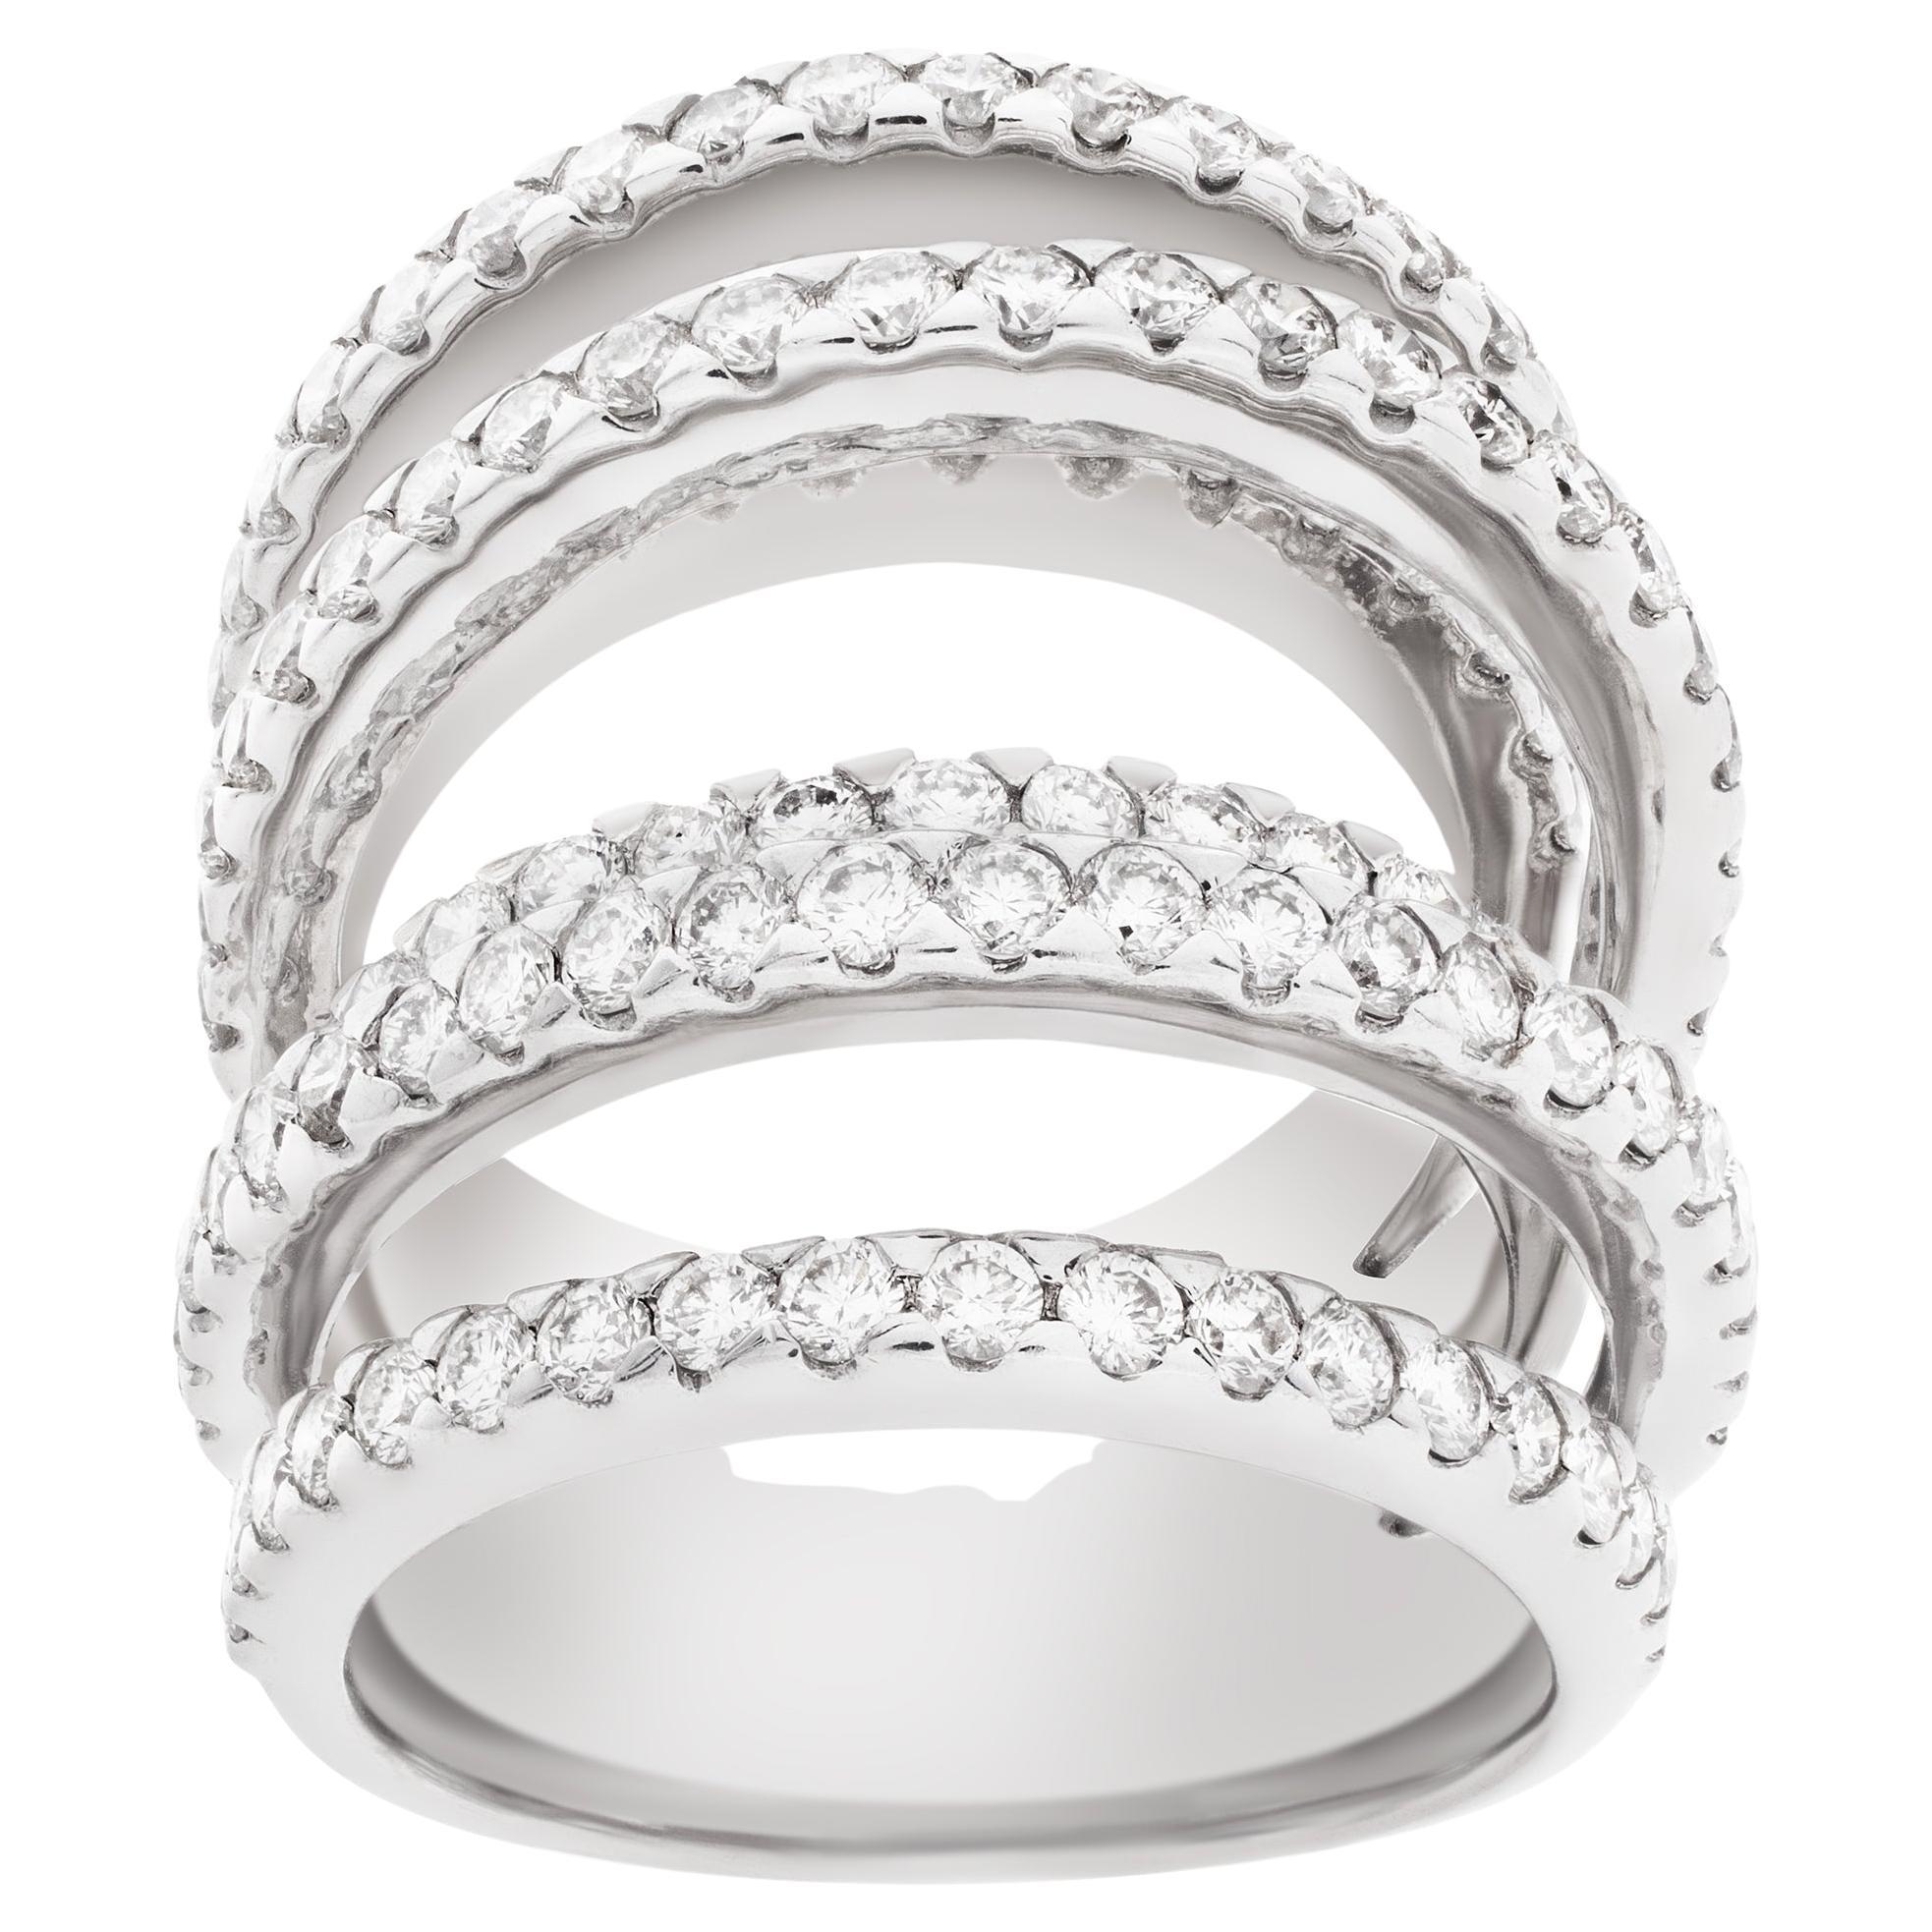 Diamond Ring Set in 18k White Gold, "Galaxy" Pave